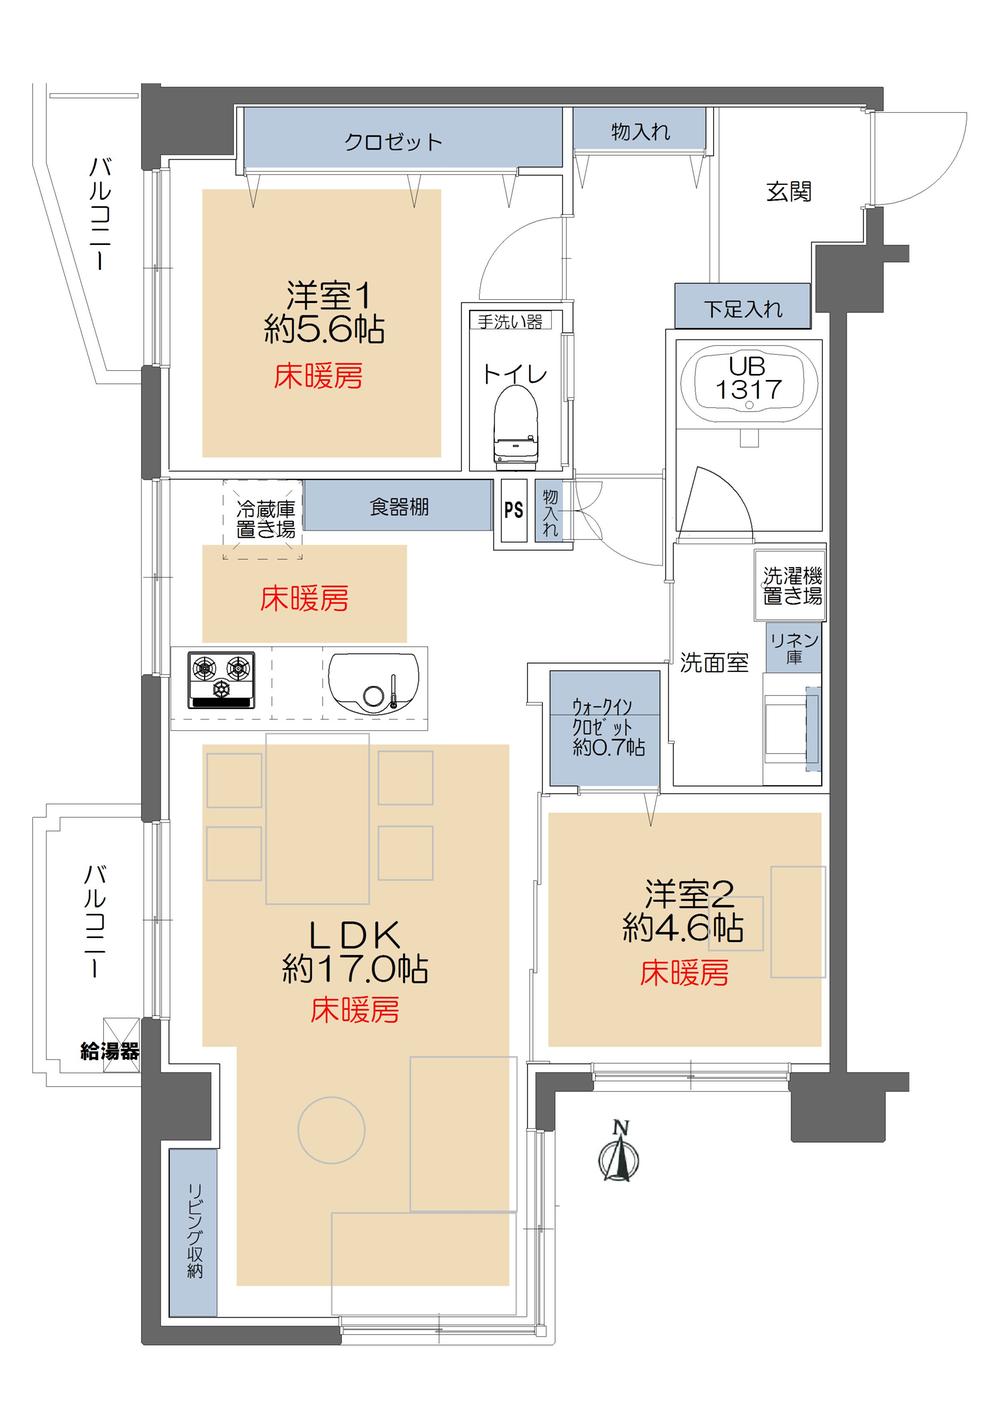 Floor plan. 2LDK, Price 52,800,000 yen, Occupied area 61.45 sq m , Balcony area 4.35 sq m